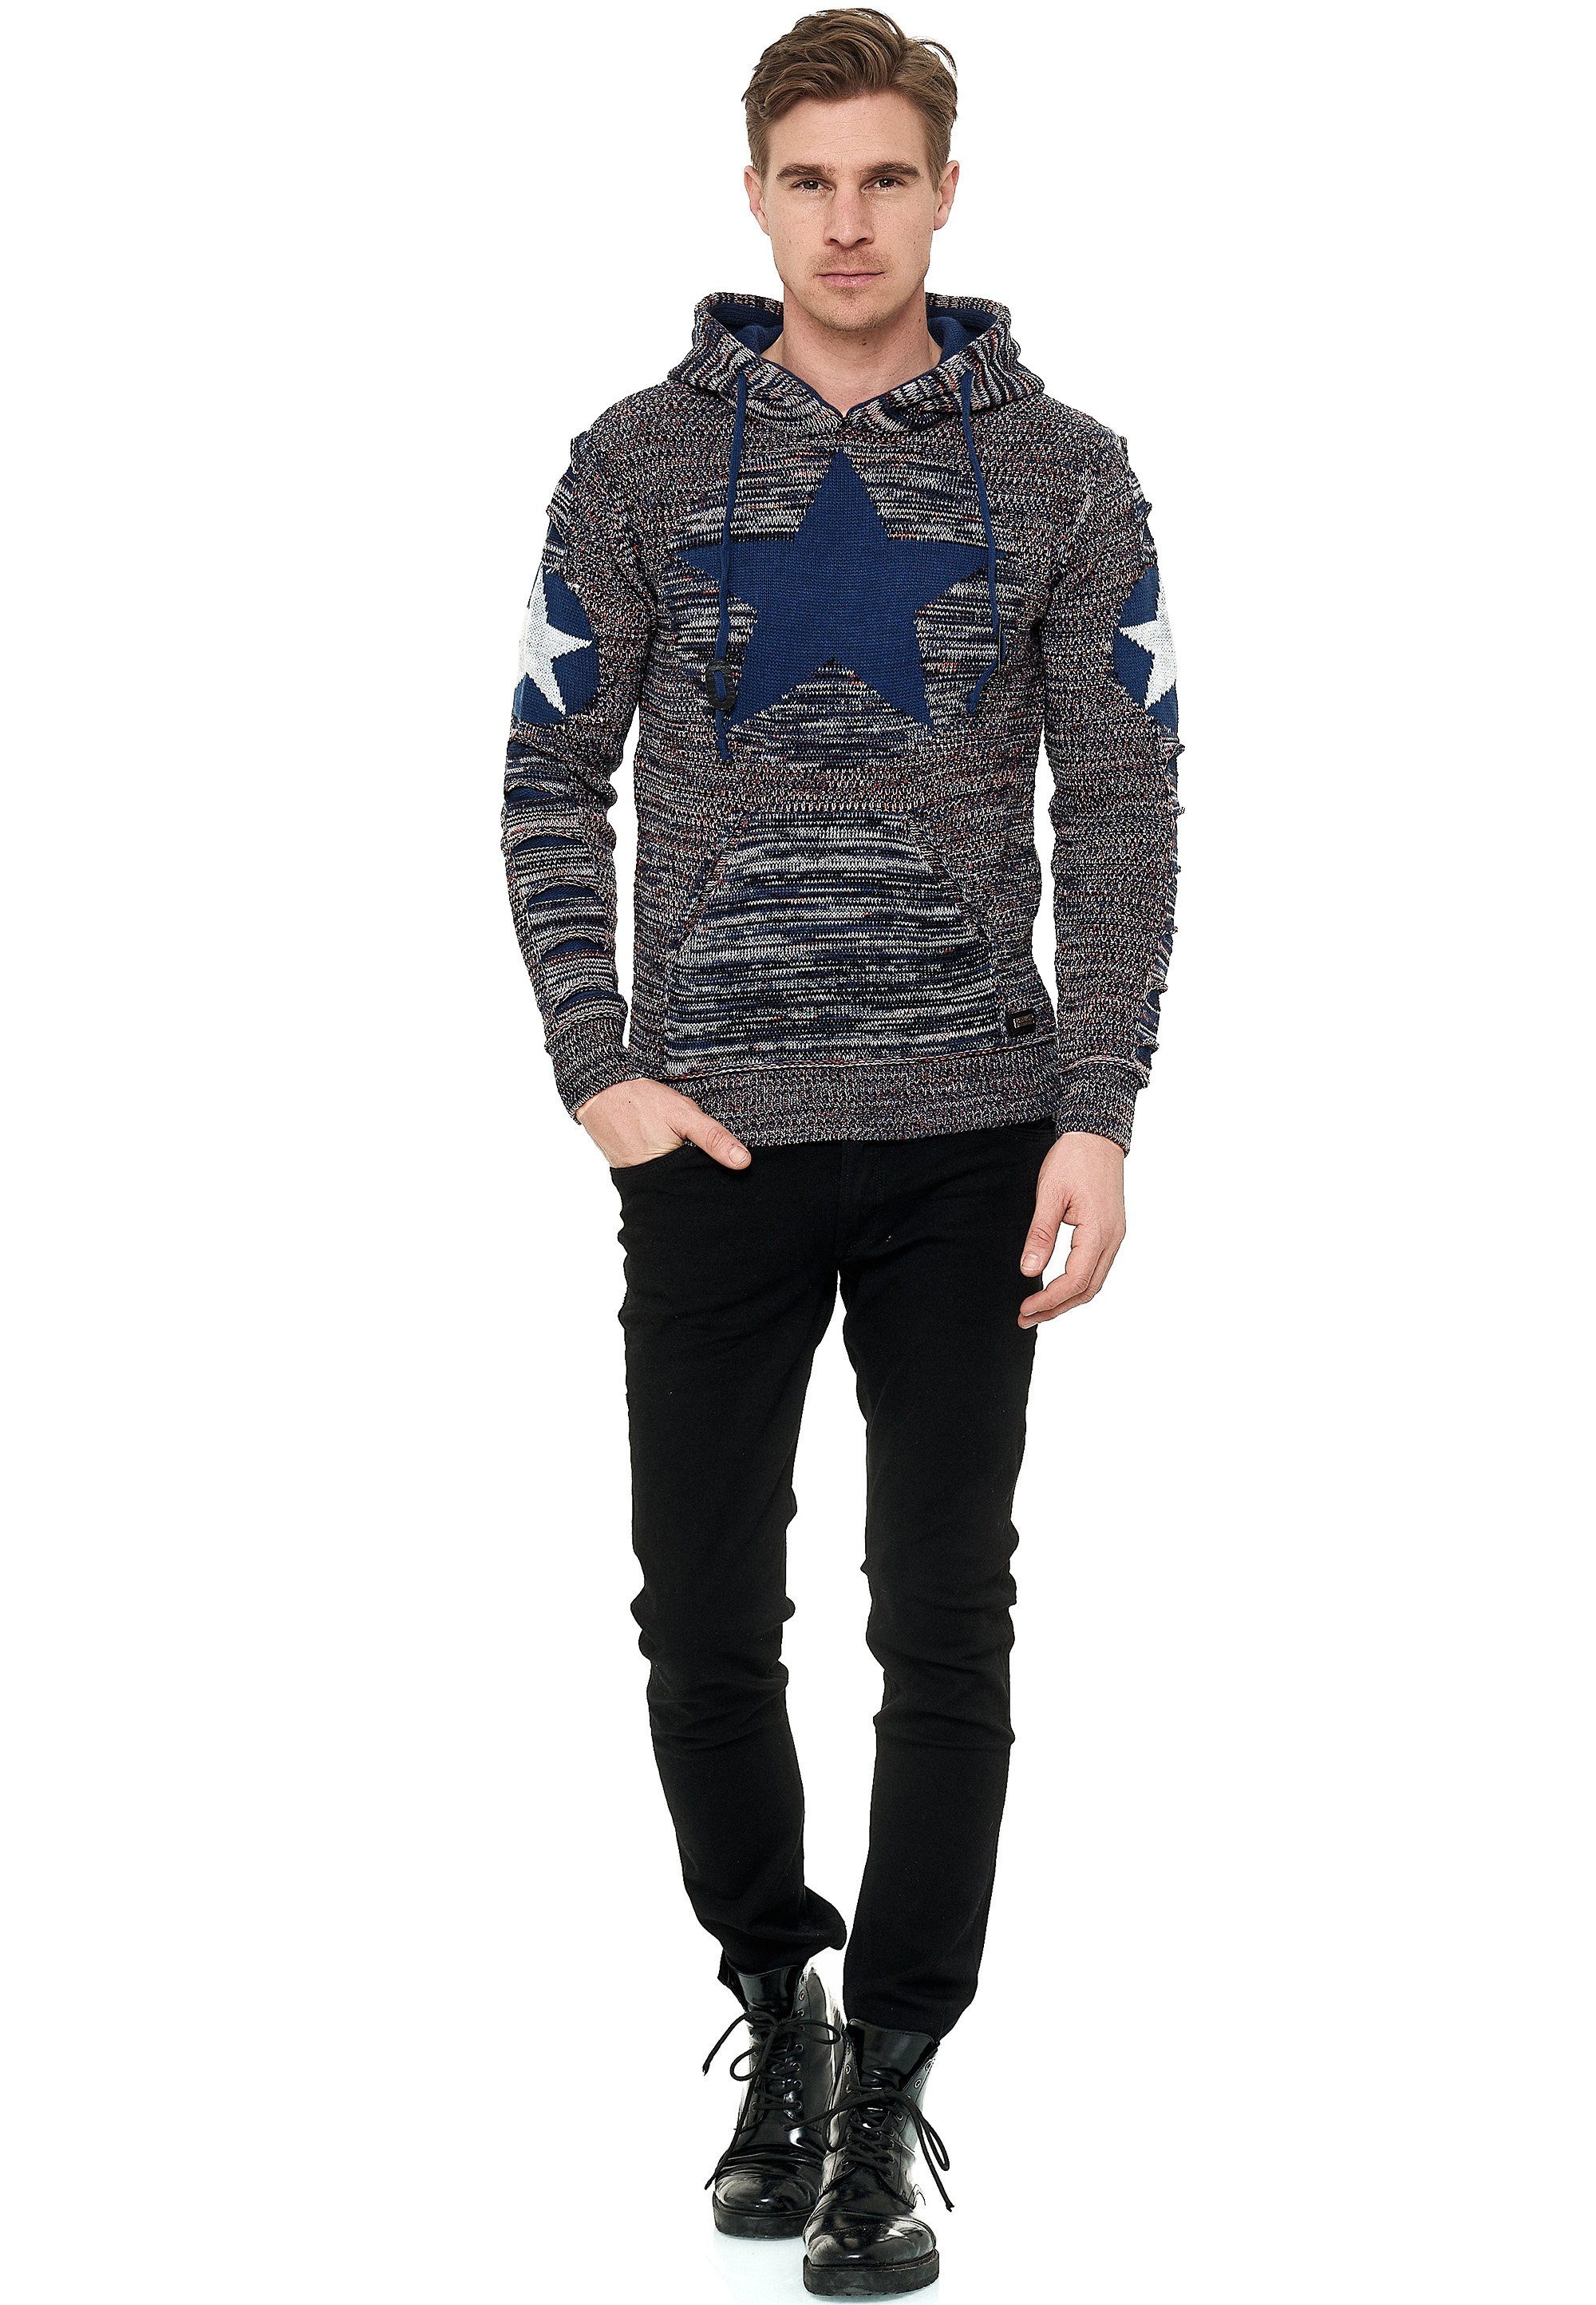 Rusty blau-grau mit Neal Kapuzensweatshirt großem Stern-Design